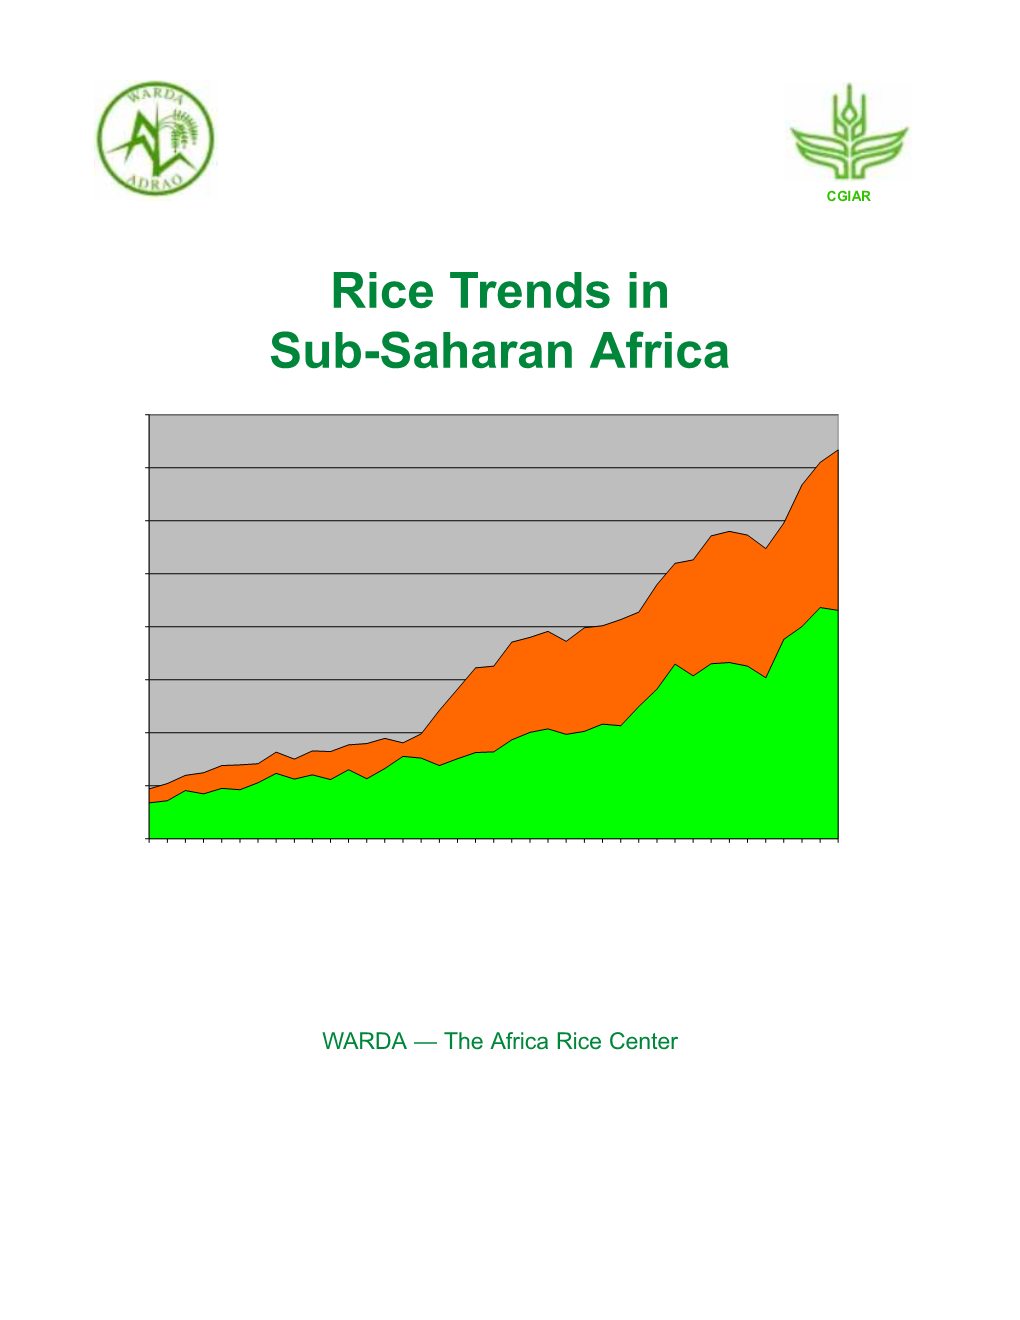 Rice Trends in Sub-Saharan Africa, 2005